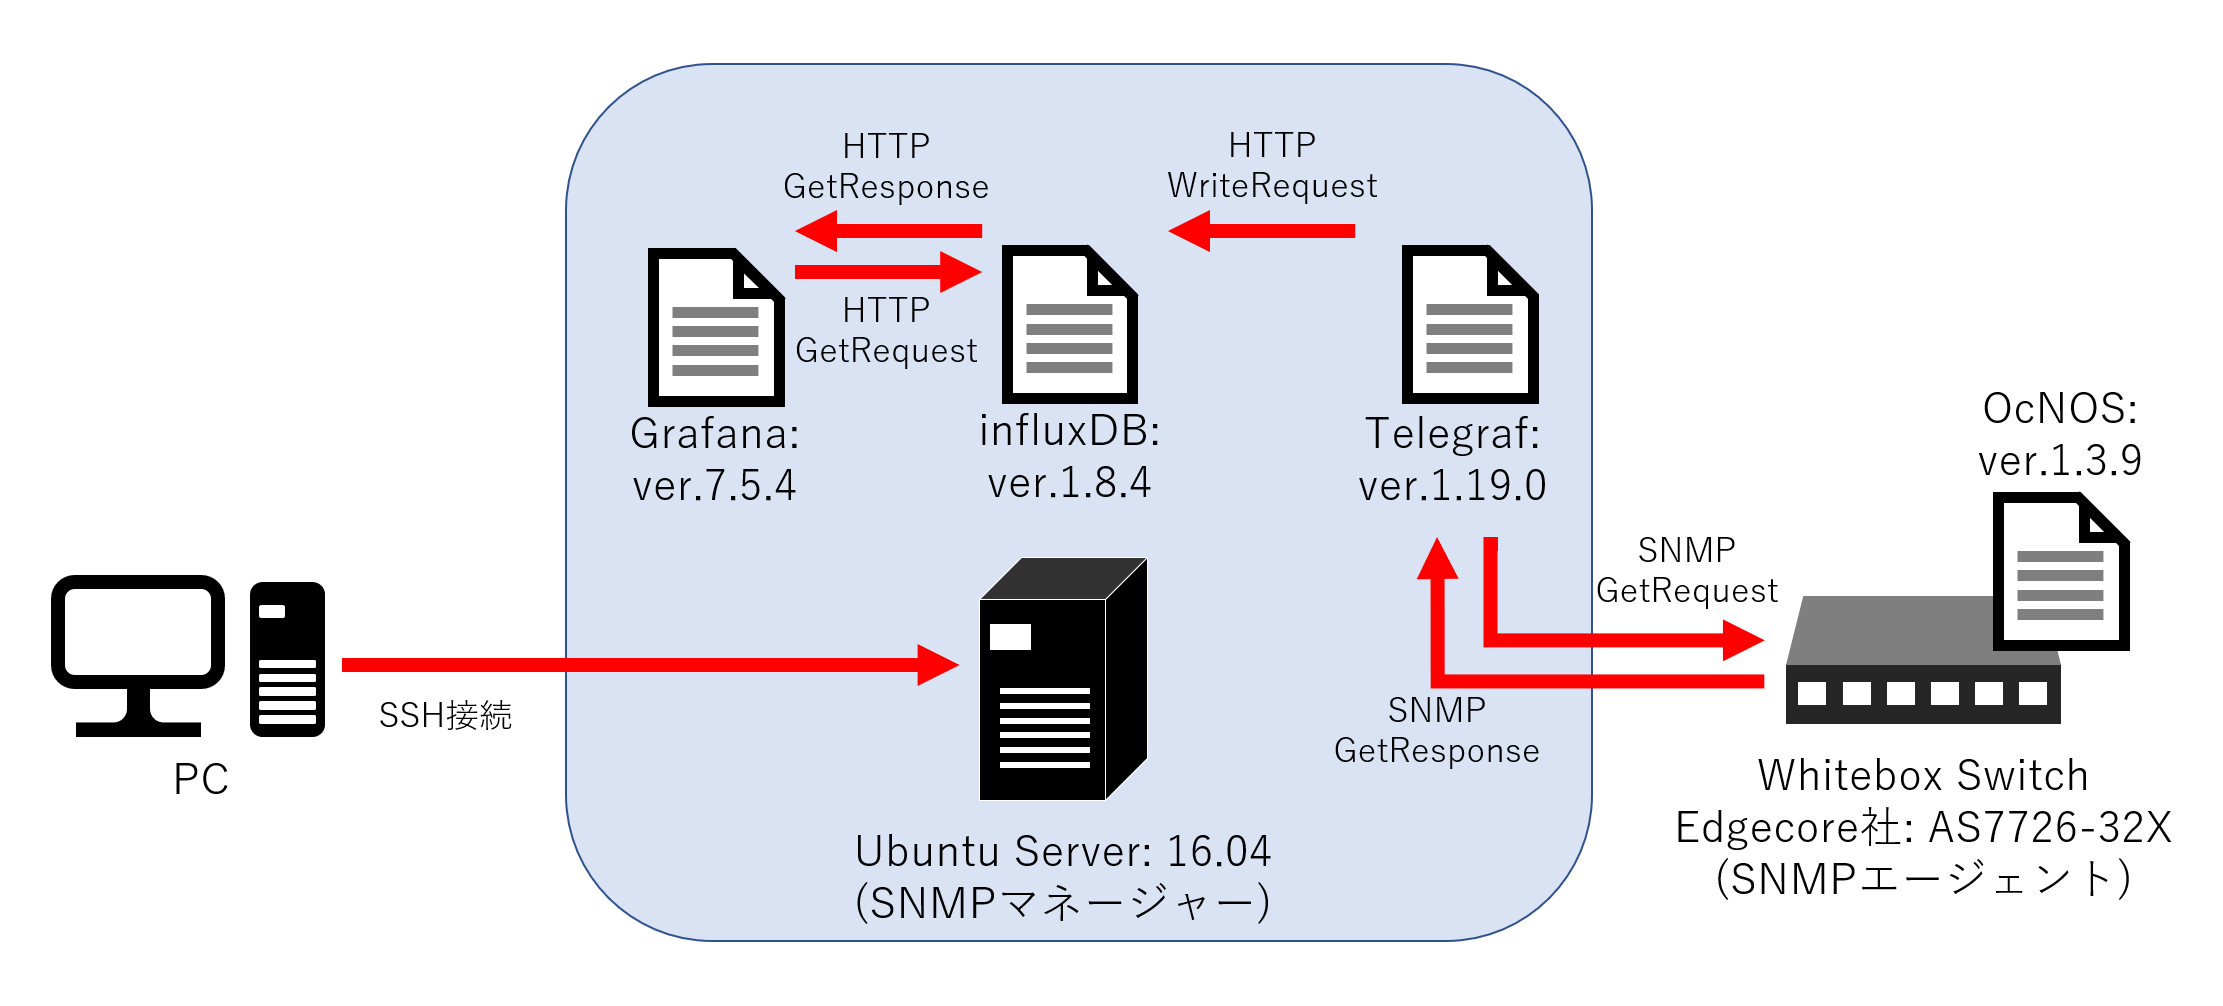 Simple network diagram